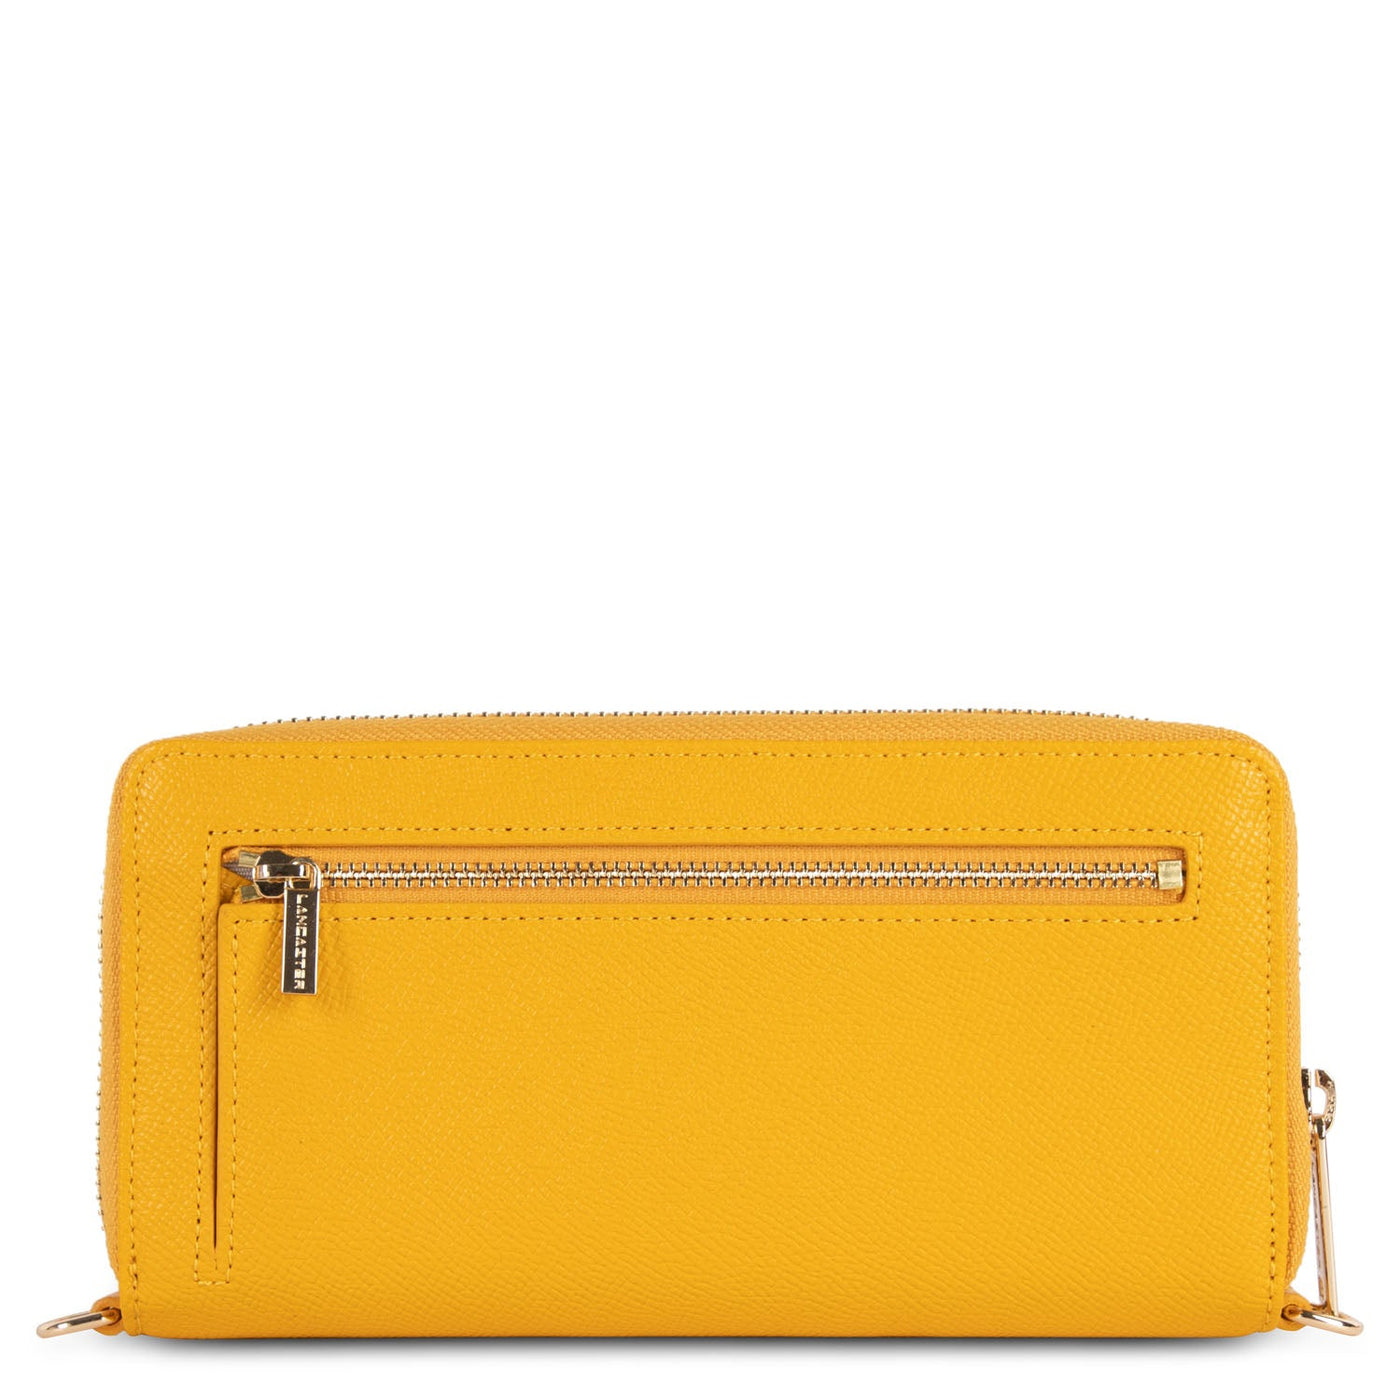 organizer wallet - delphino #couleur_jaune